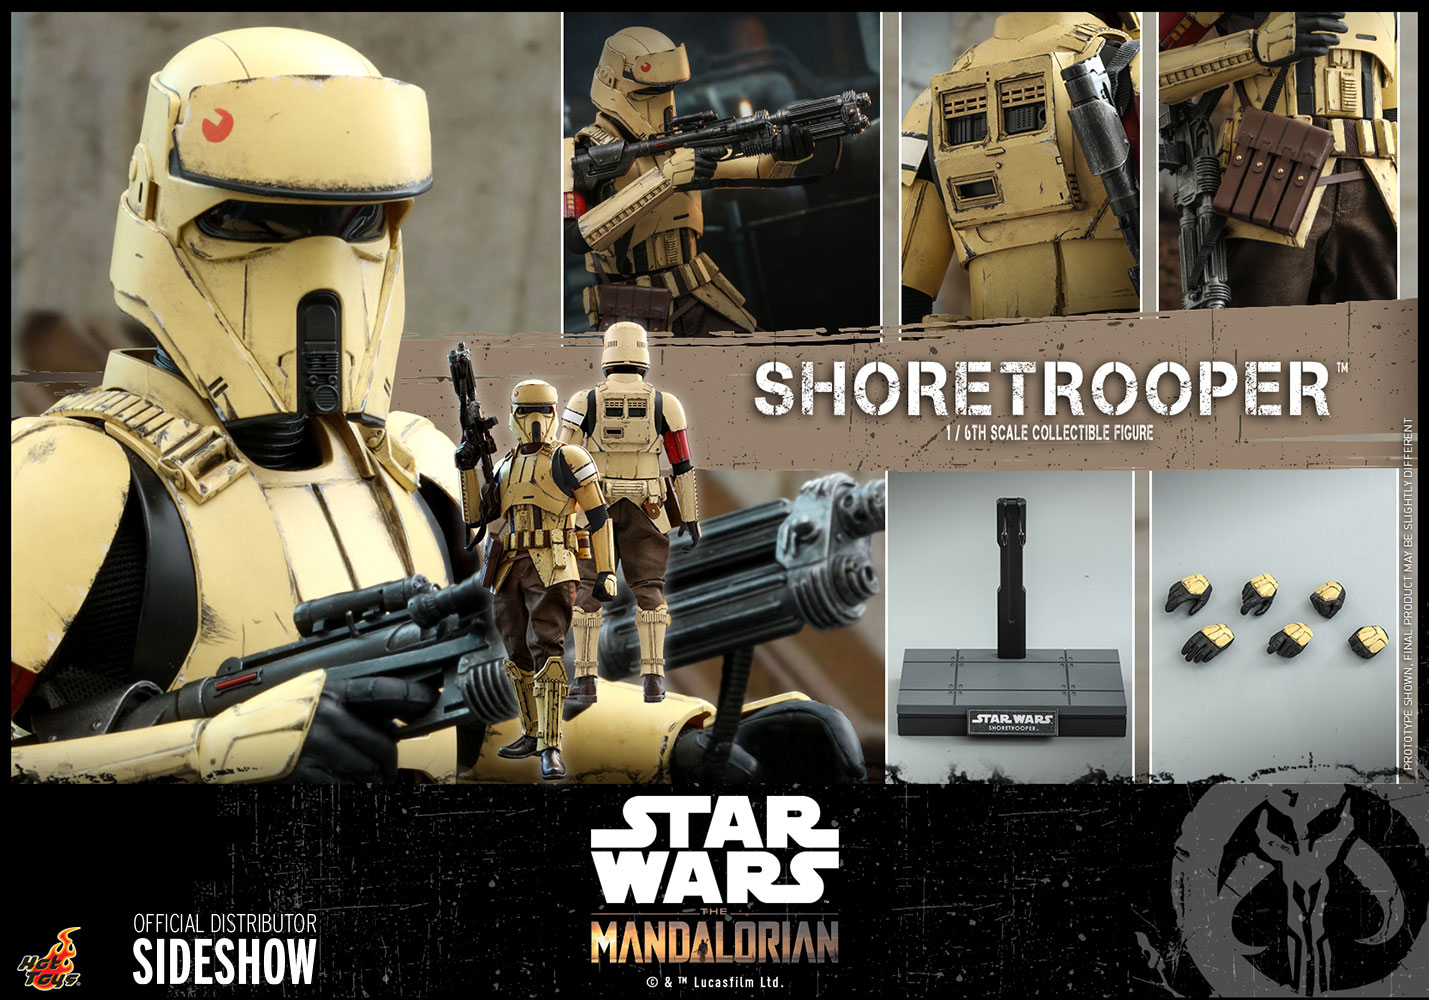 Star Wars: The Mandalorian - Shoretrooper 1:6 Scale Figure 